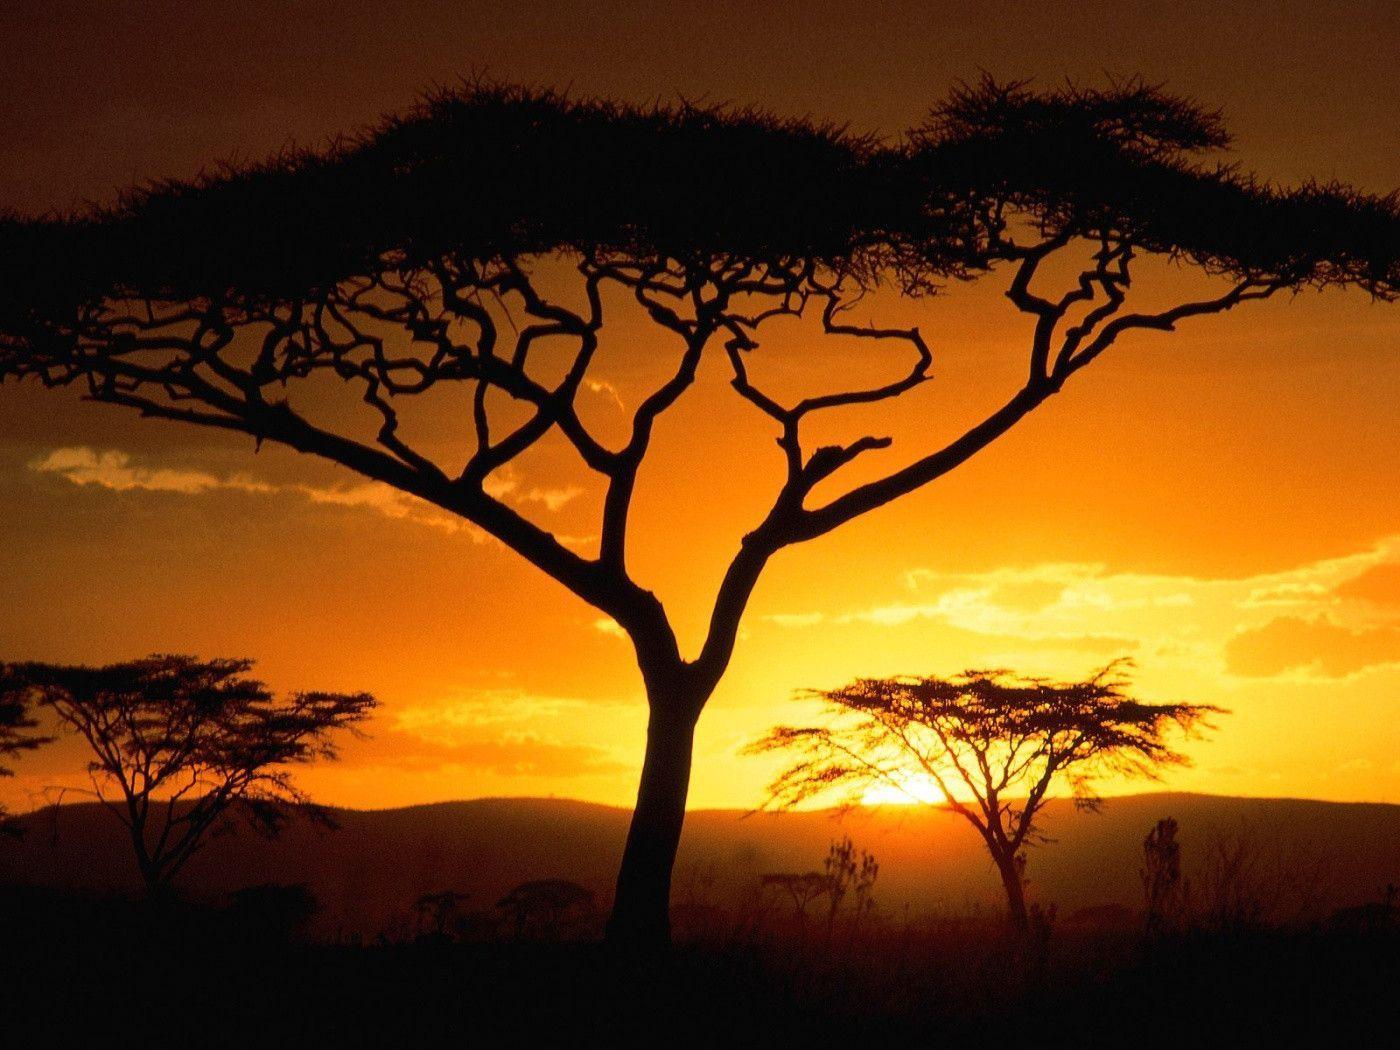 Tanzanian Sunset, Africa desktop wallpapers